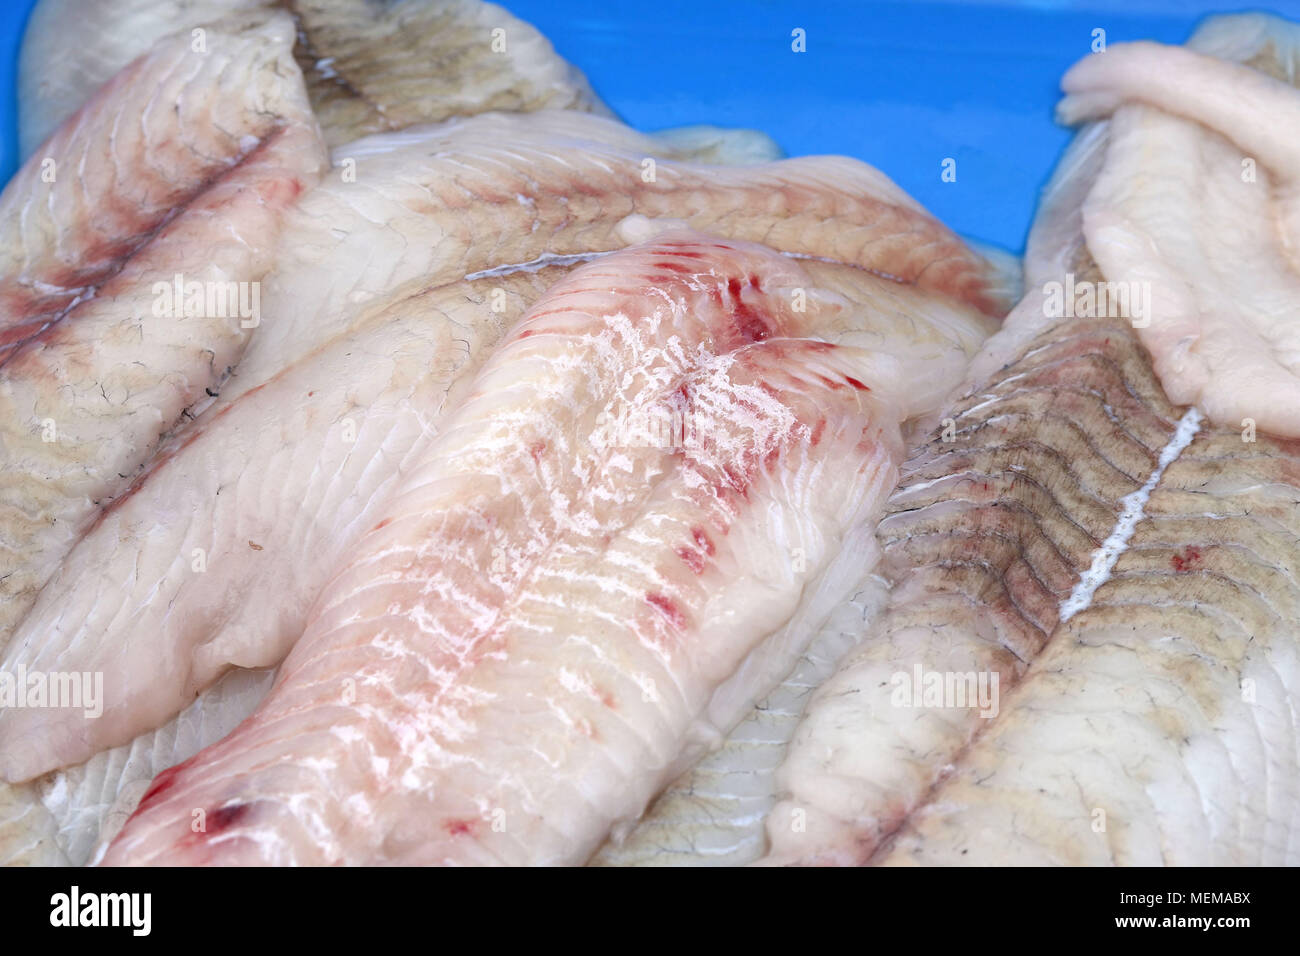 A pile of monkfish at fish market Stock Photo